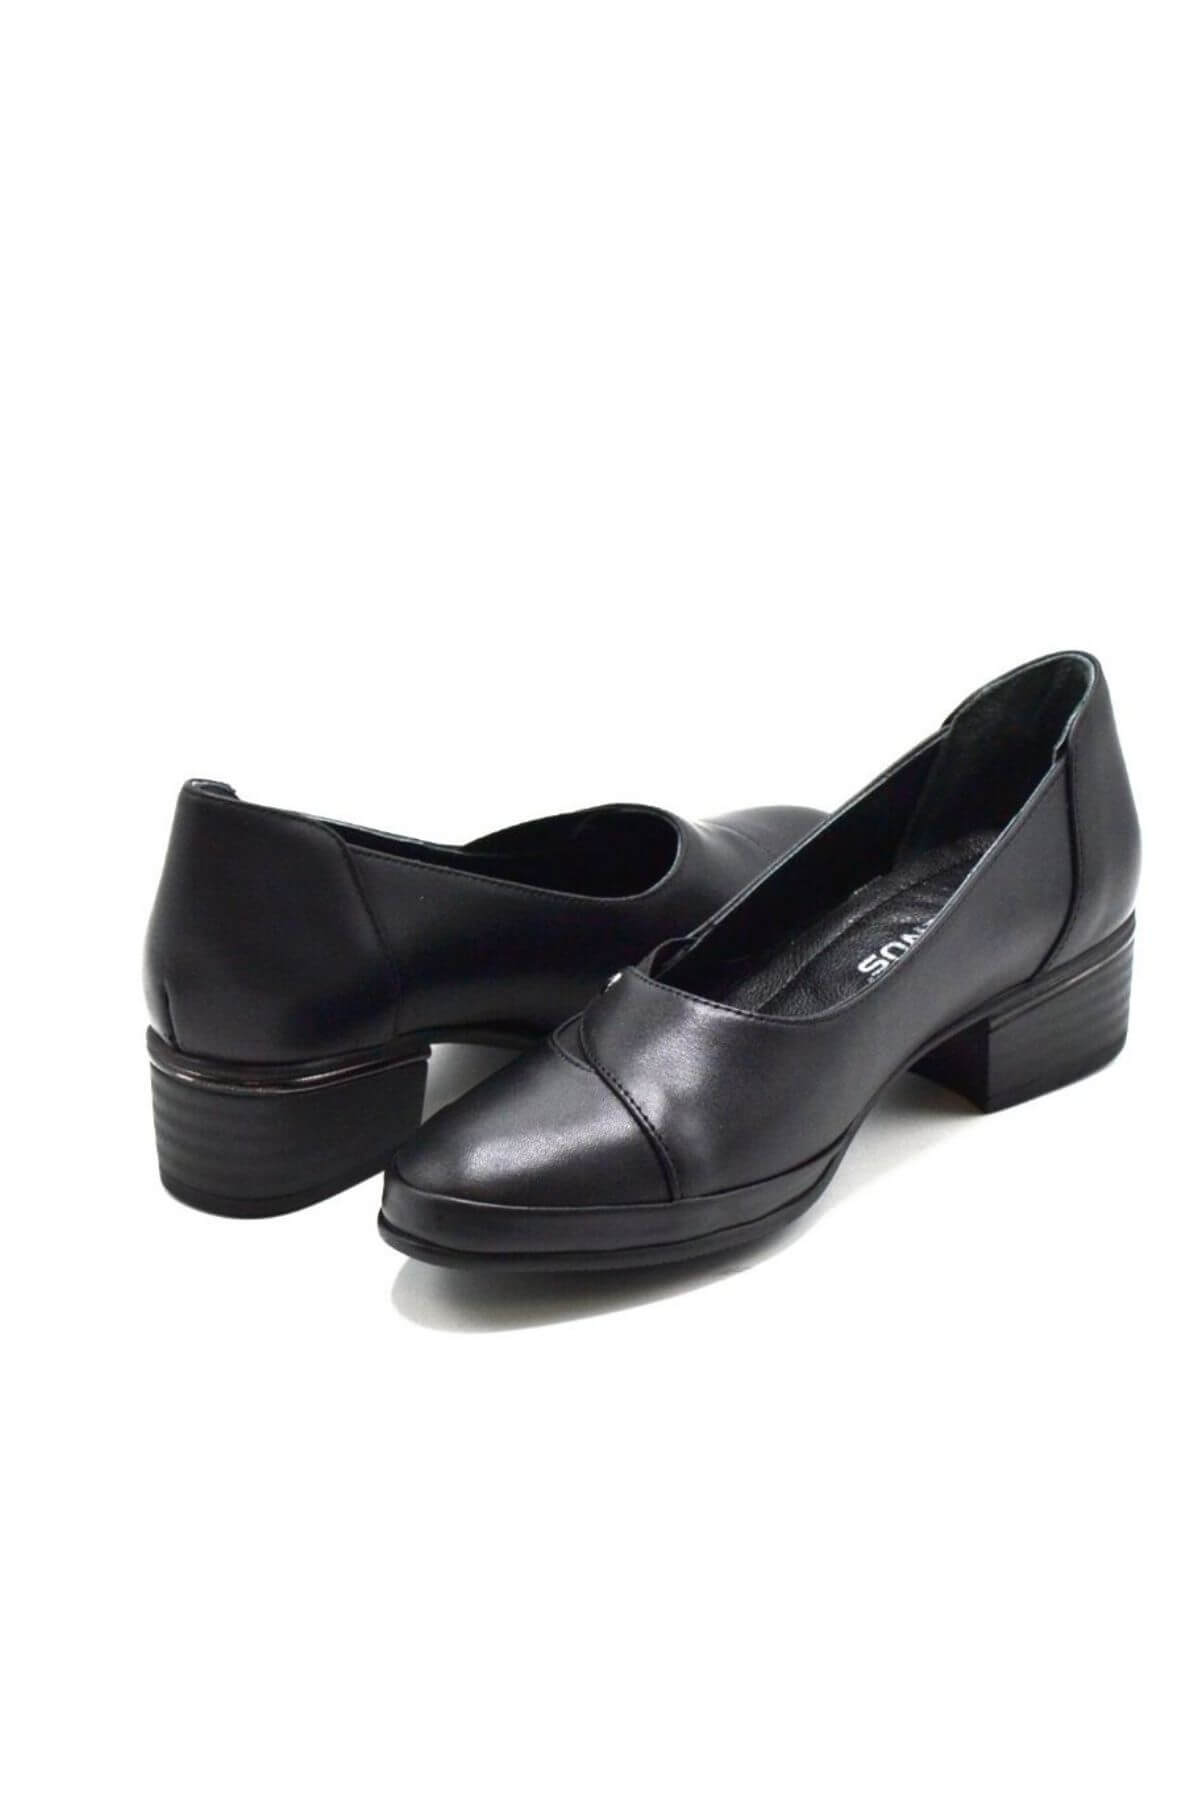 Kadın Topuklu Deri Ayakkabı Siyah 2312515K - Thumbnail